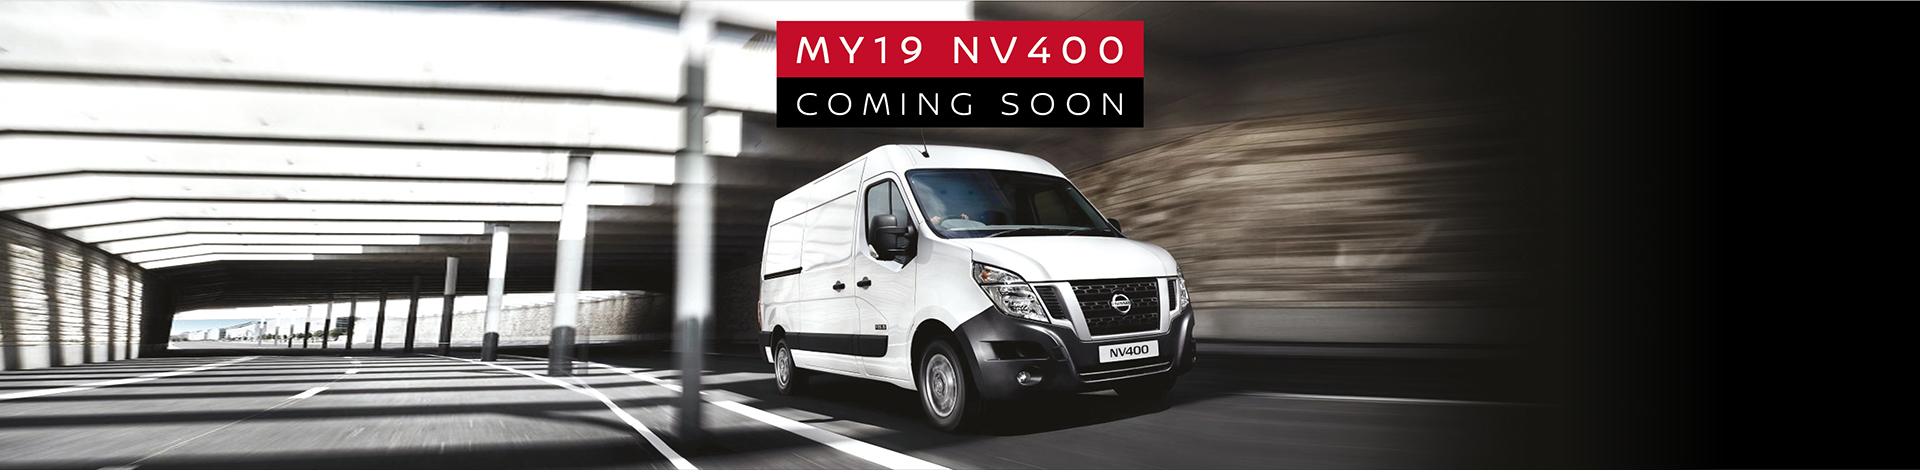 Nissan NV400 Coming Soon